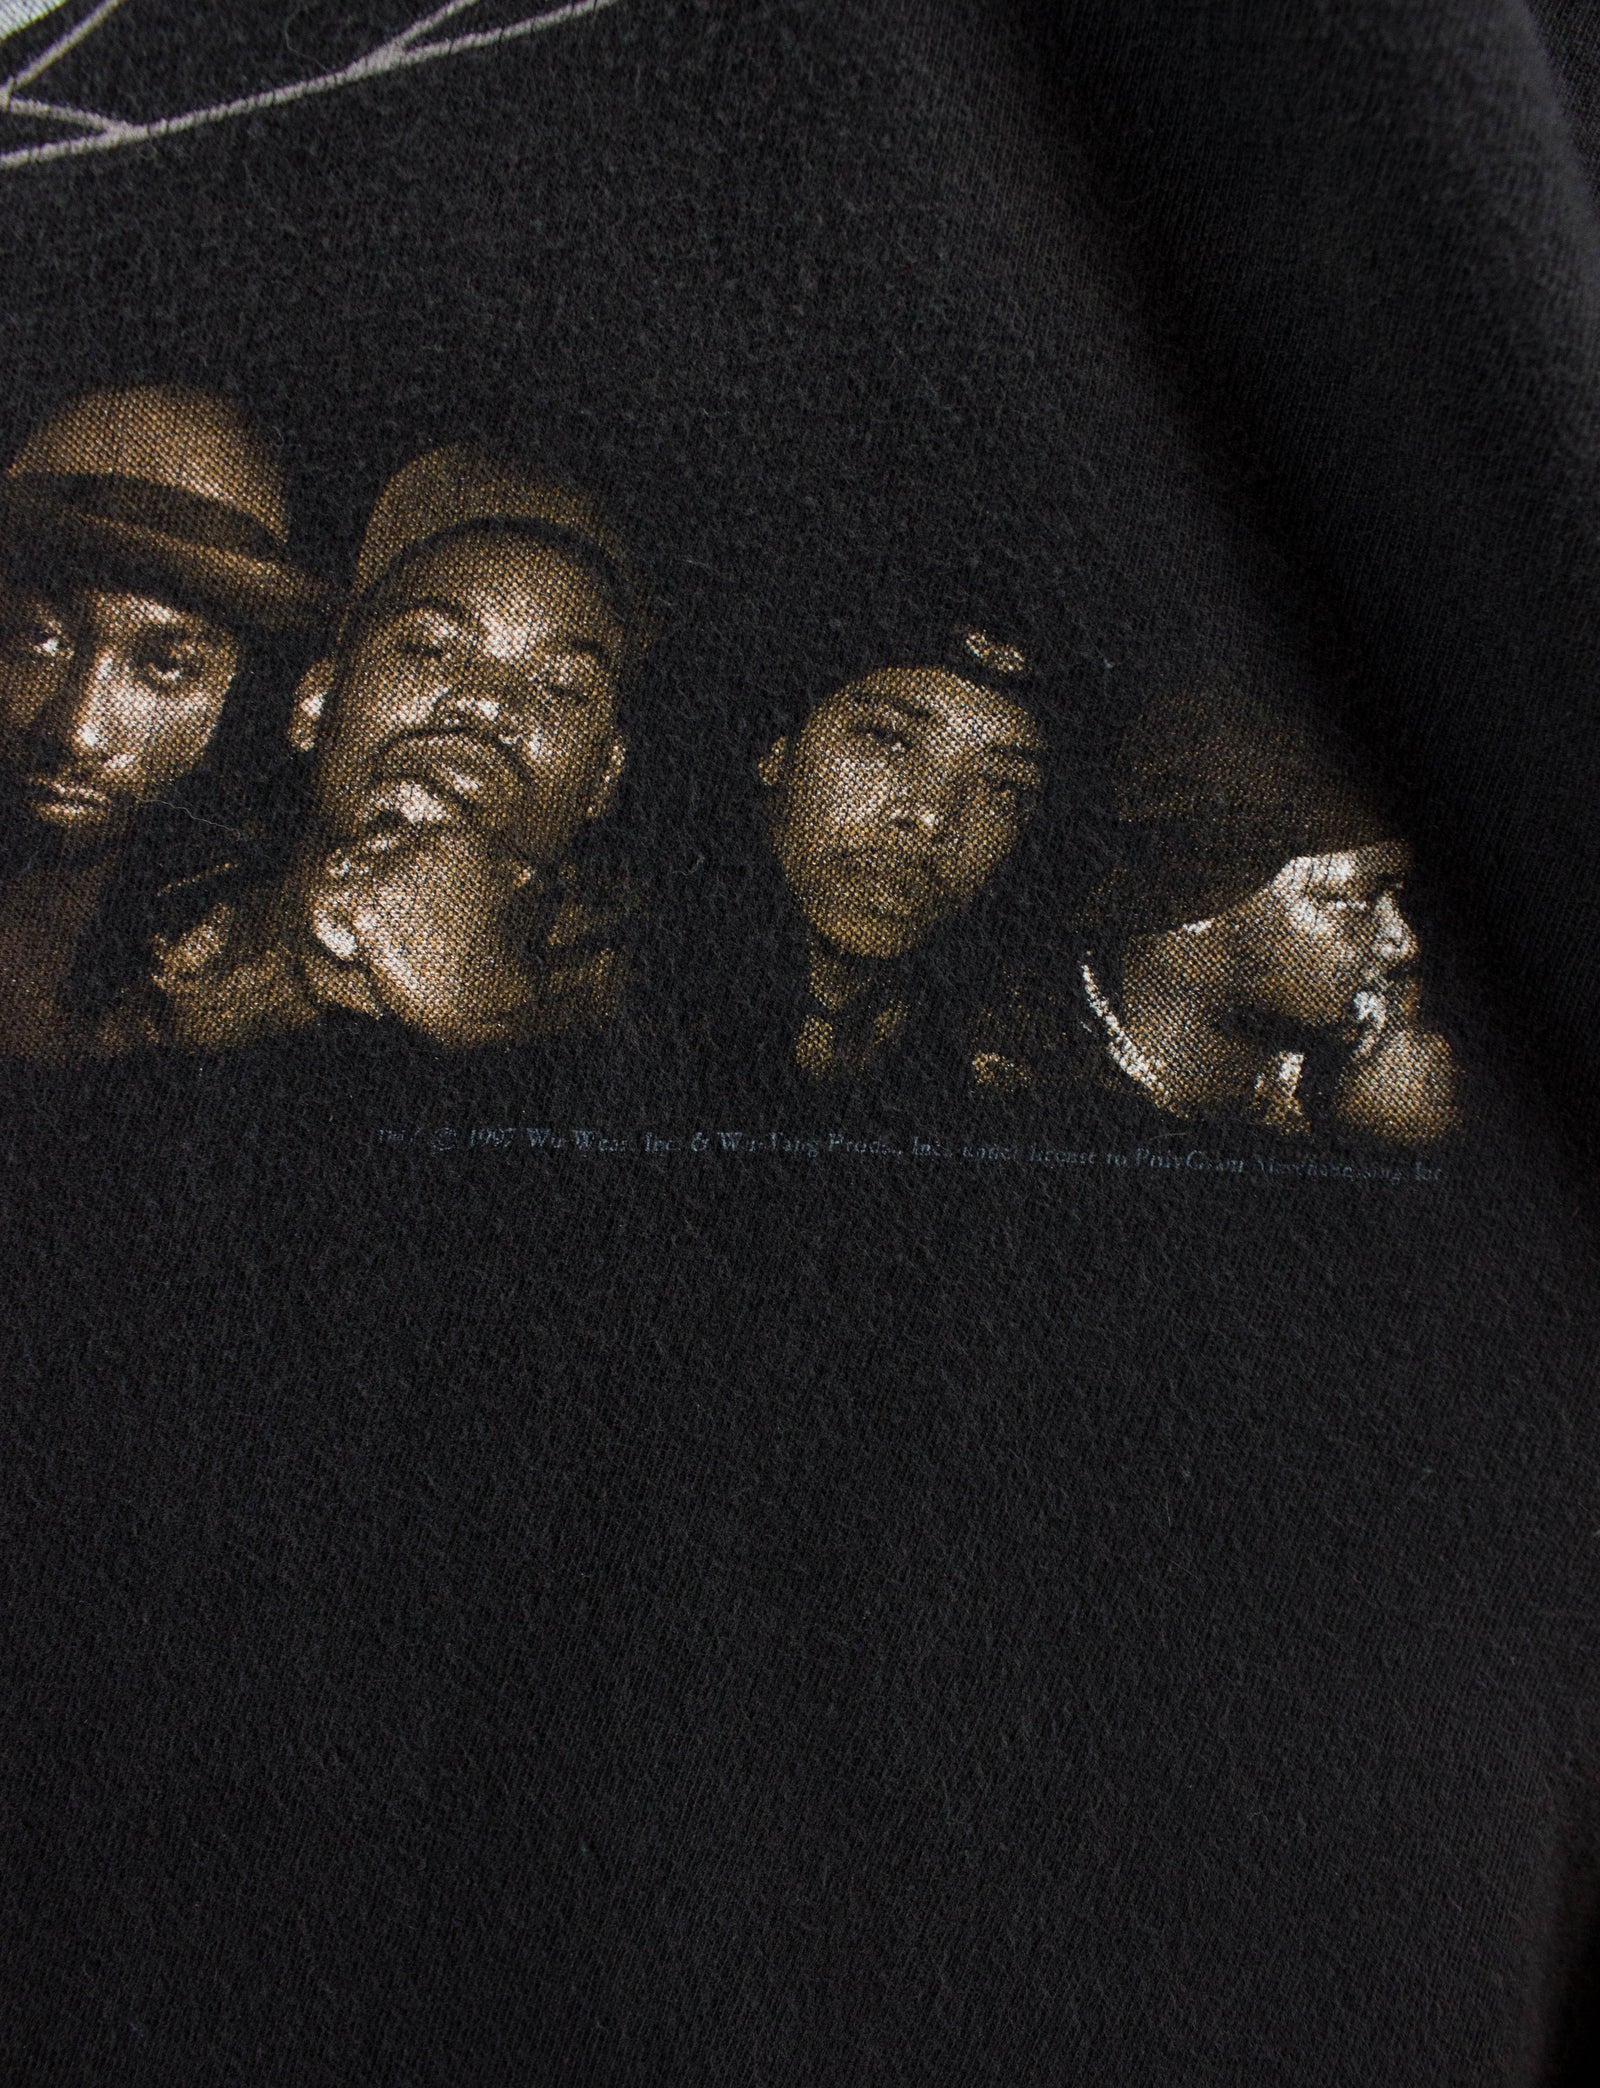 Wu Tang Clan 1997 Wu Tang Forever Official Black Rap Tee Concert T Shirt Unisex XL-XXL